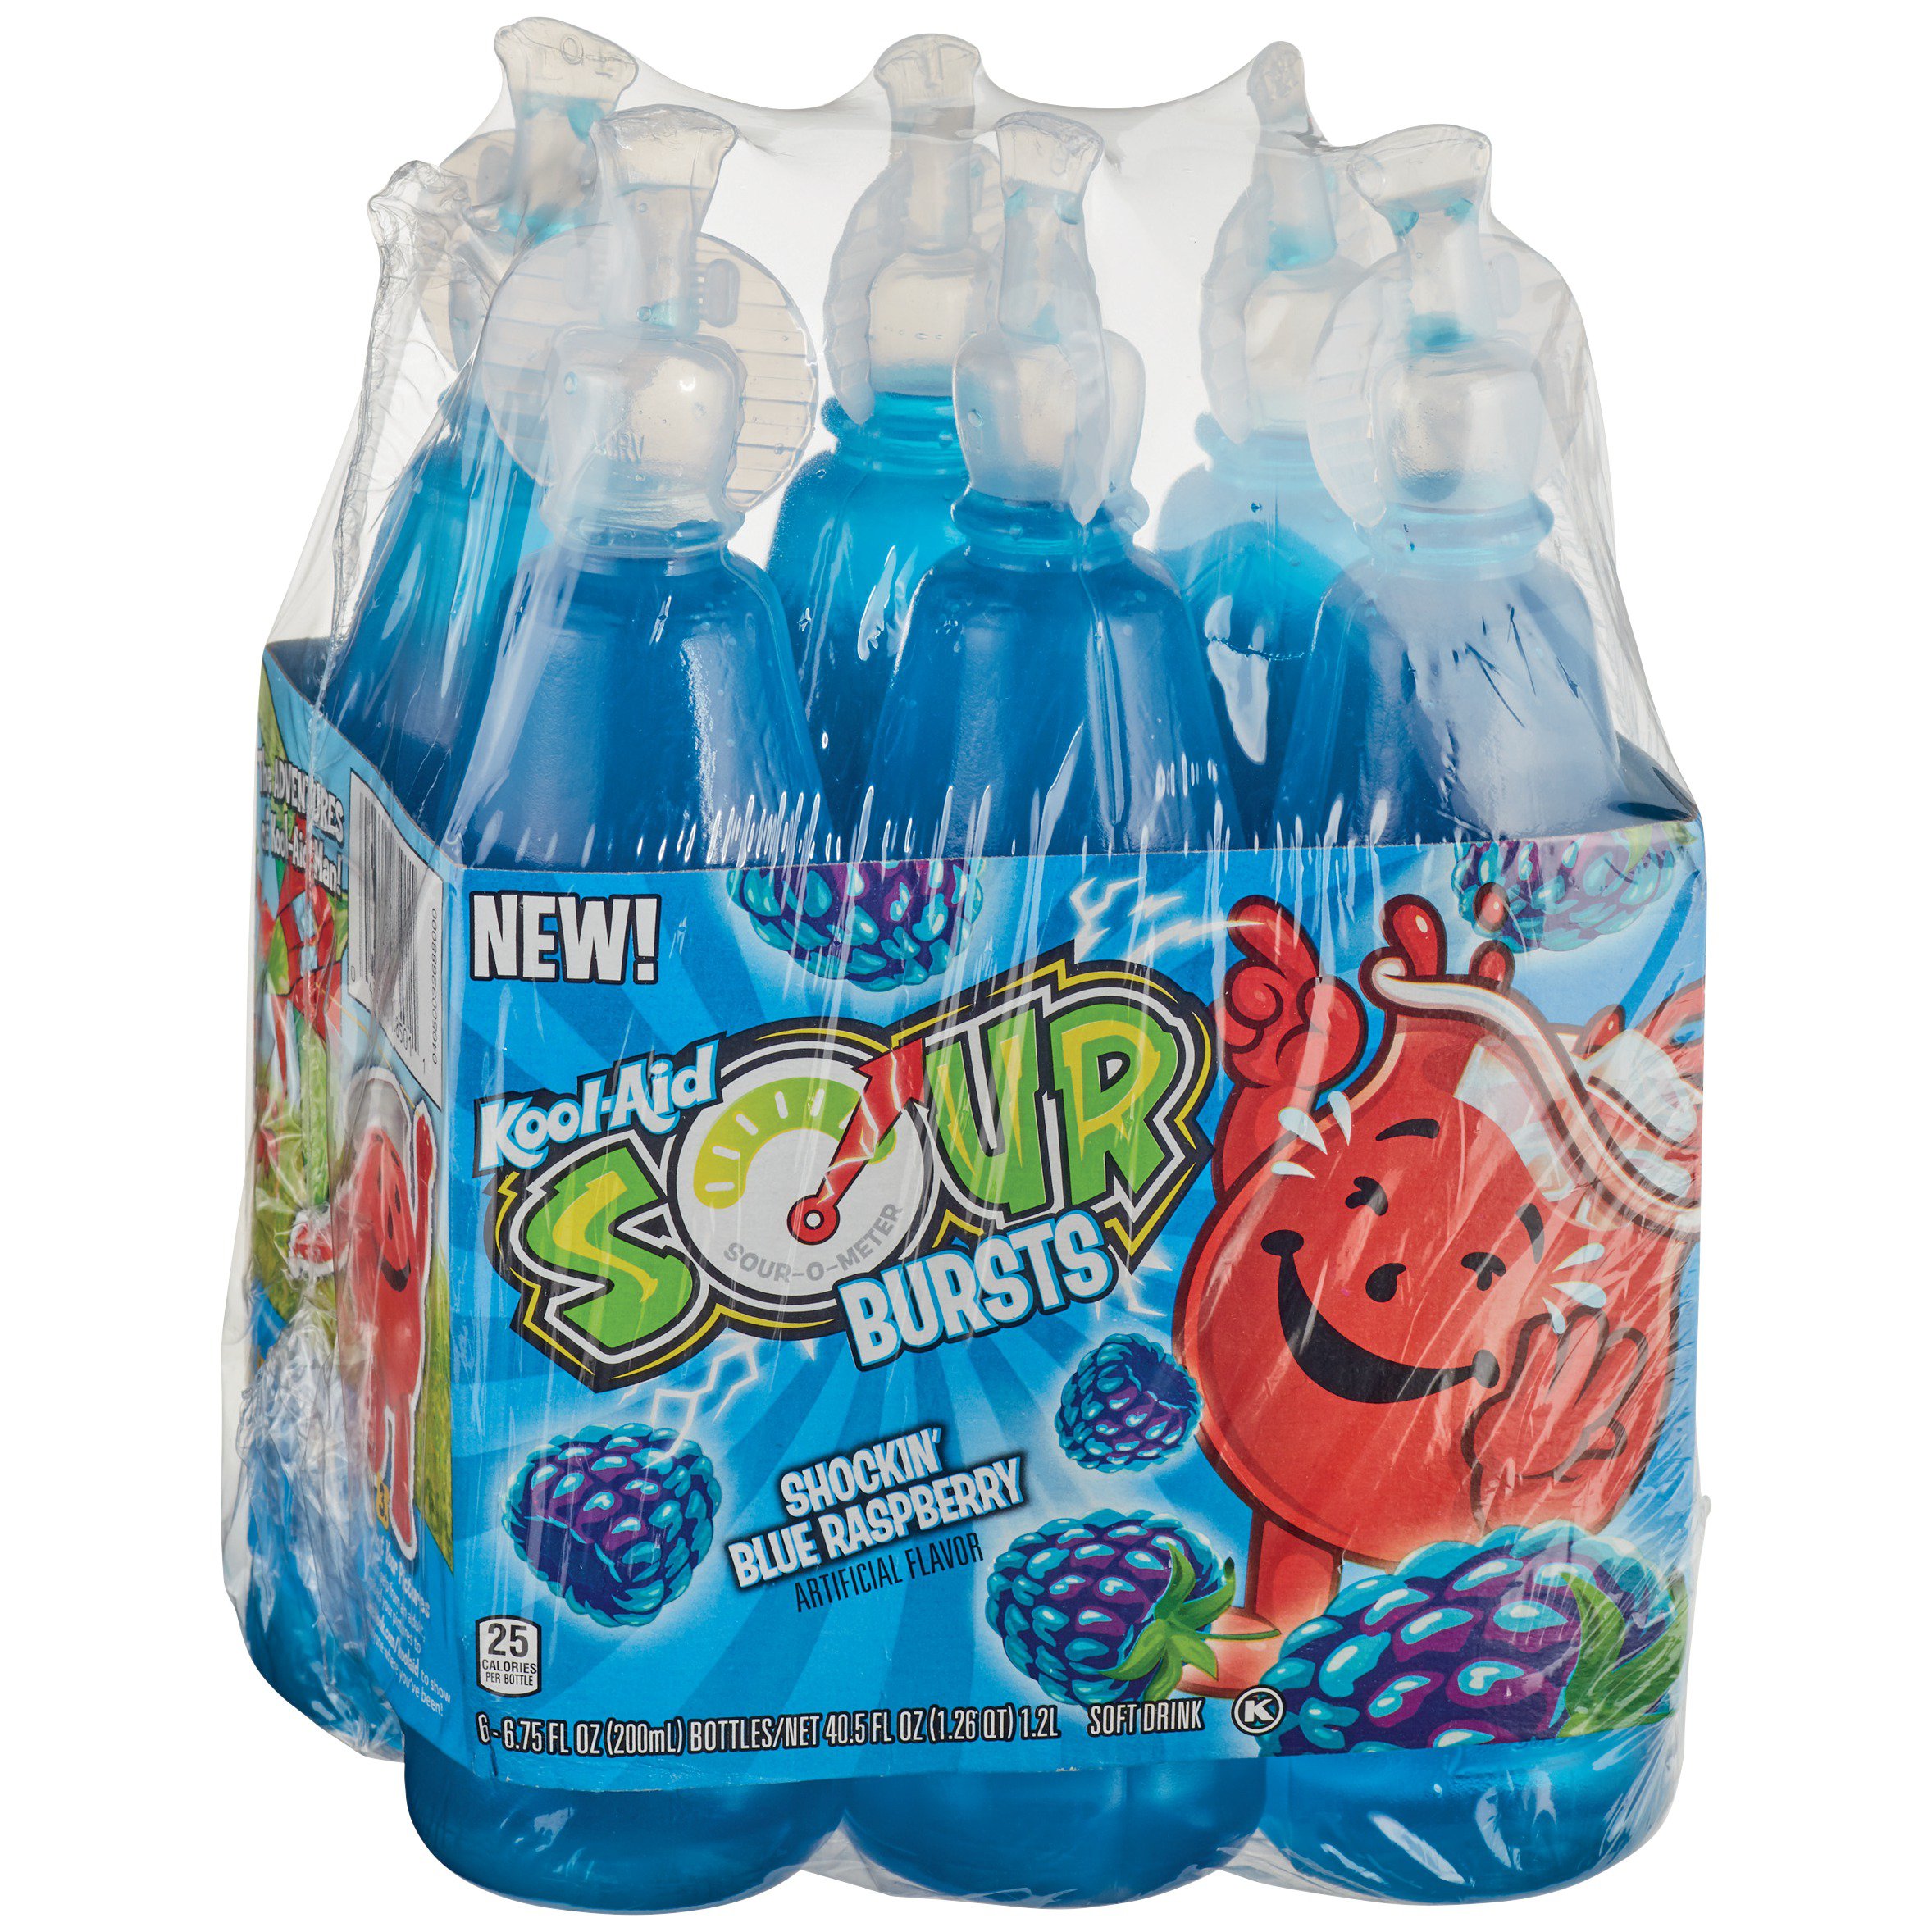 Kool Aid Sour Bursts Shockin Blue Raspberry Soft Drink 6 75 Oz Bottles Shop Juice At H E B